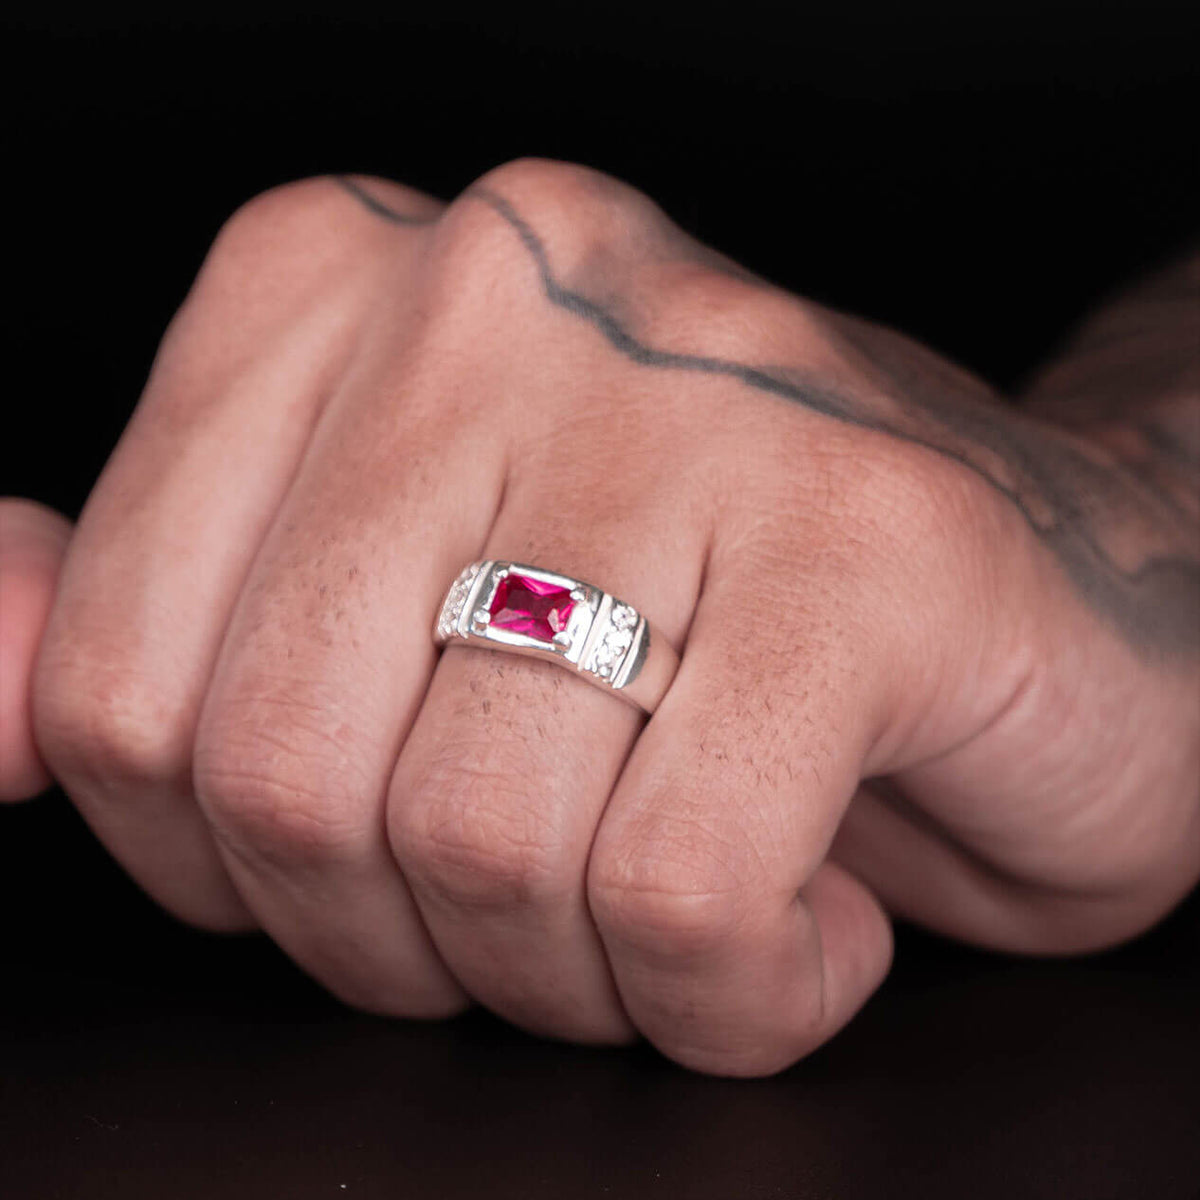 anel formatura vermelho masculino de prata 925. Anéis masculinos. Anel pedra vermelha. anel de prata masculino. anel masculino. joias masculinas. anel de formatura masculino.